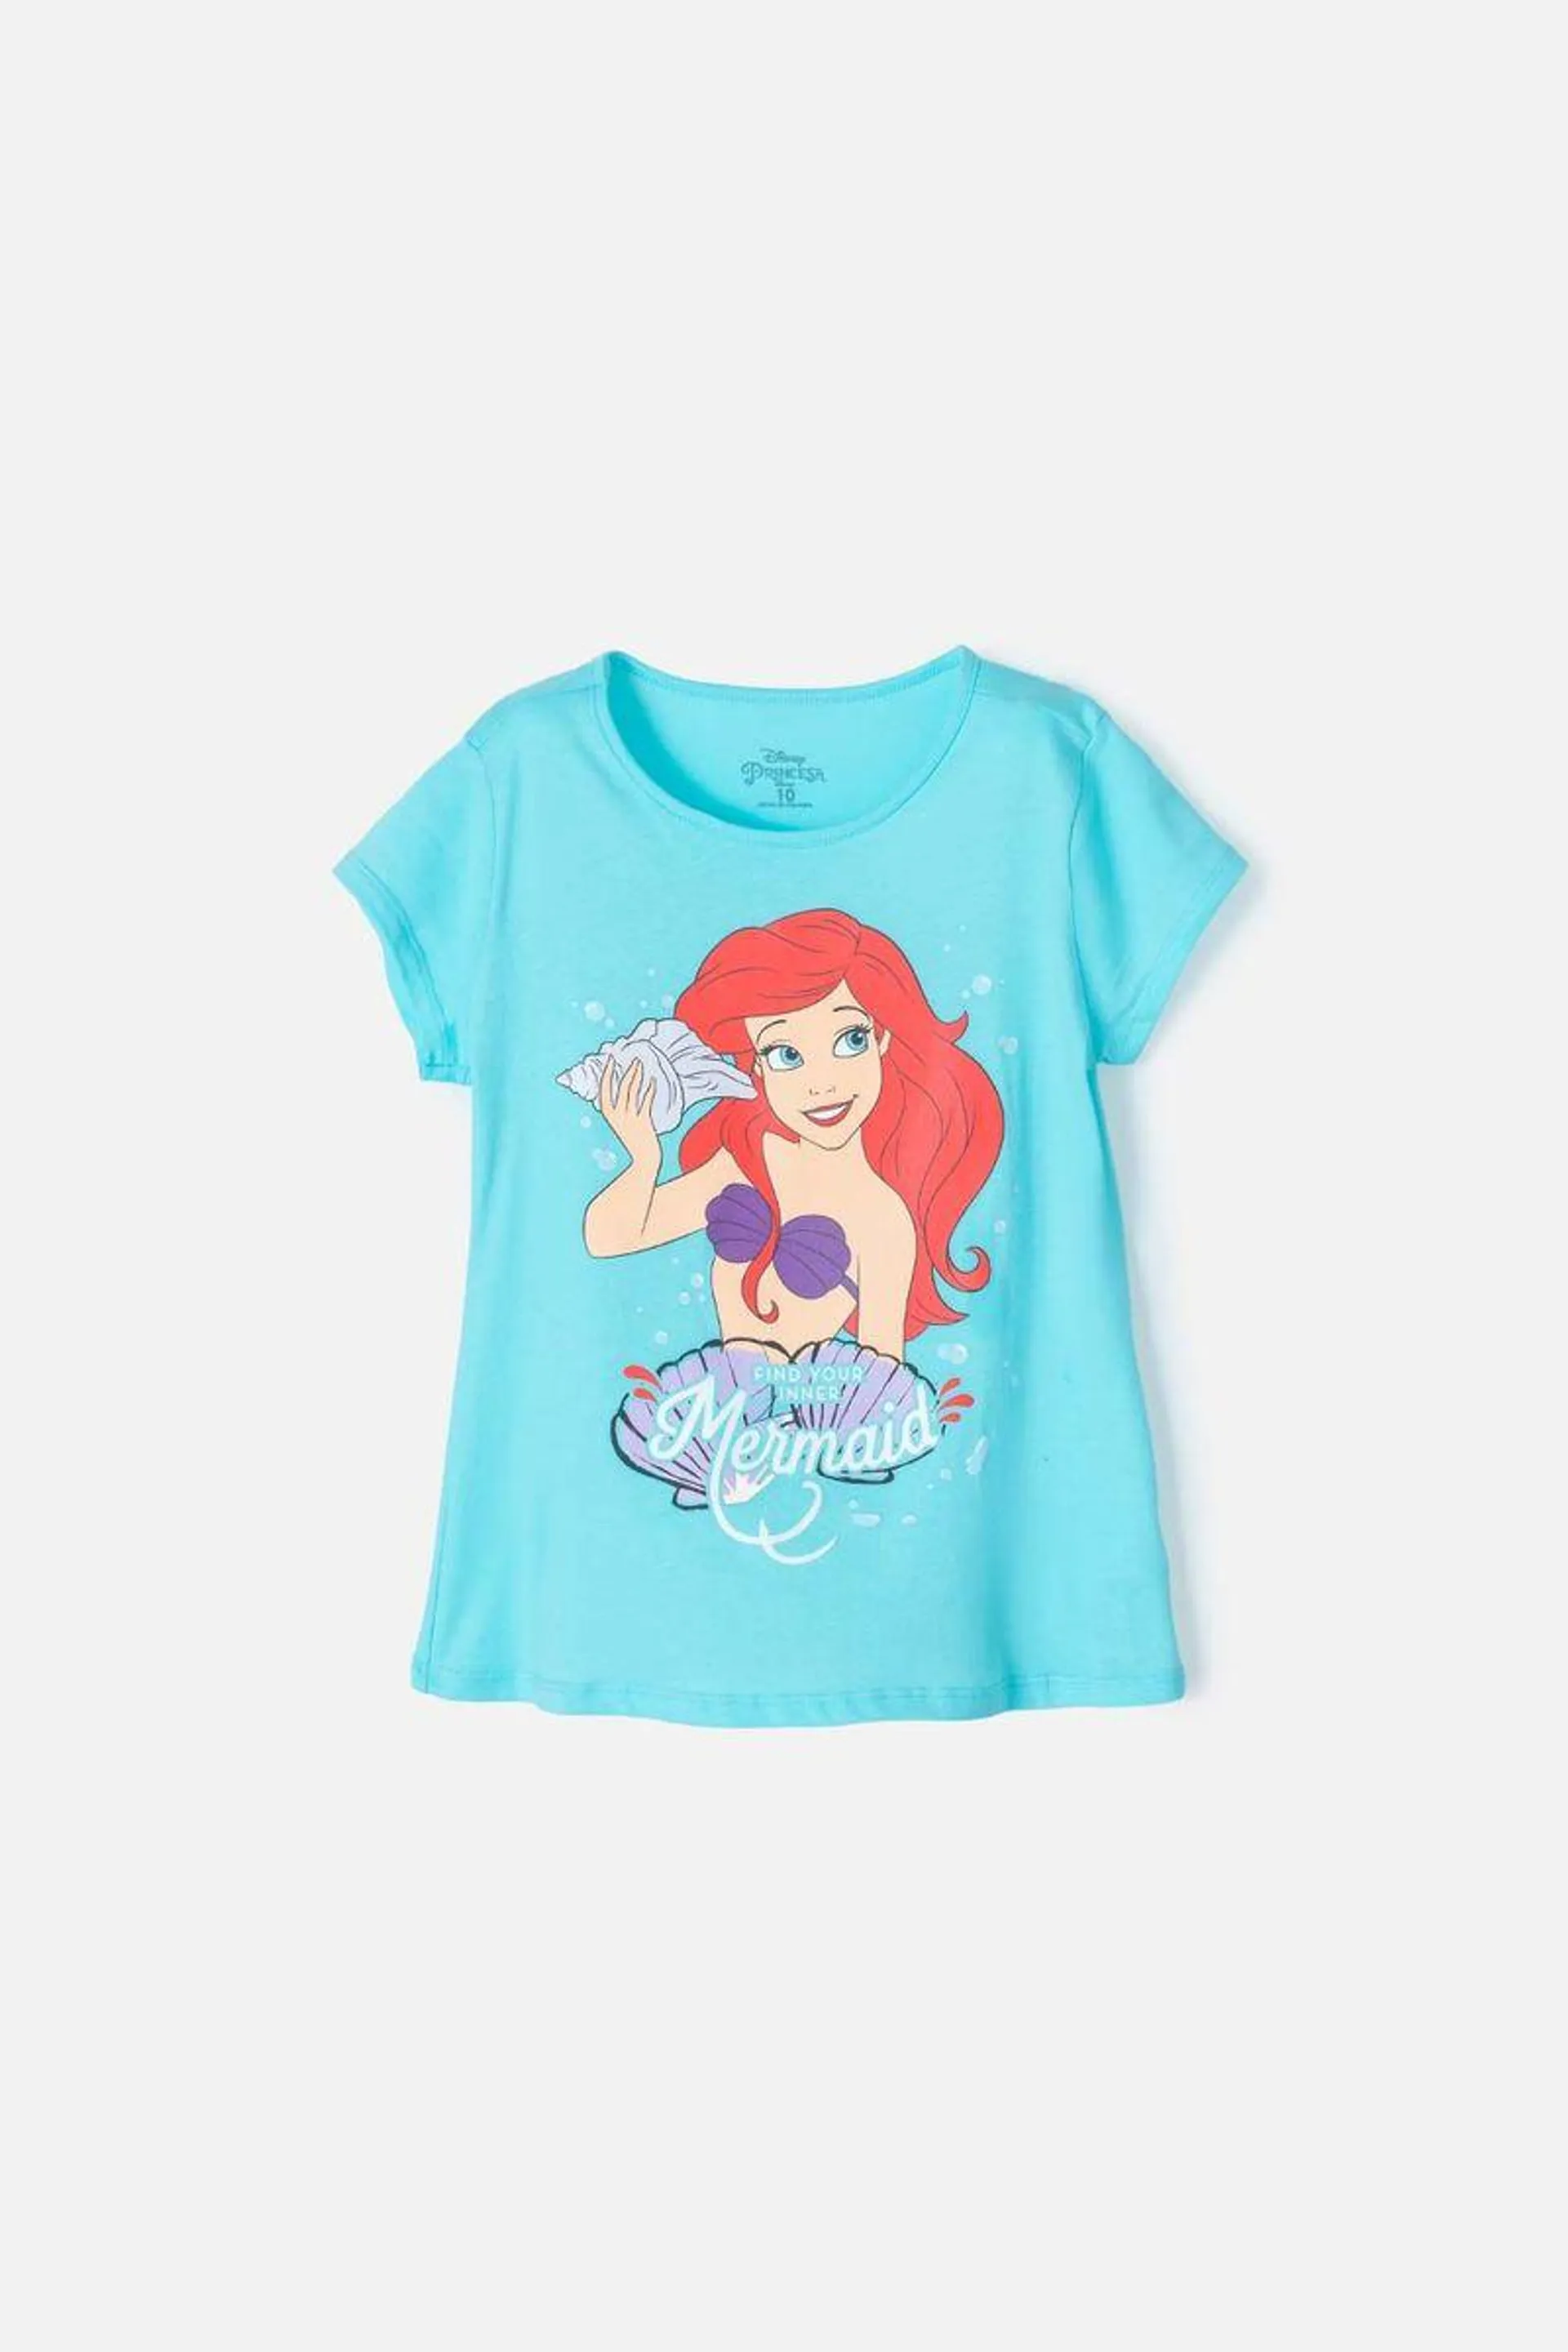 Camiseta de niña,camiseta iconica turqueza de Princesas ©Disney